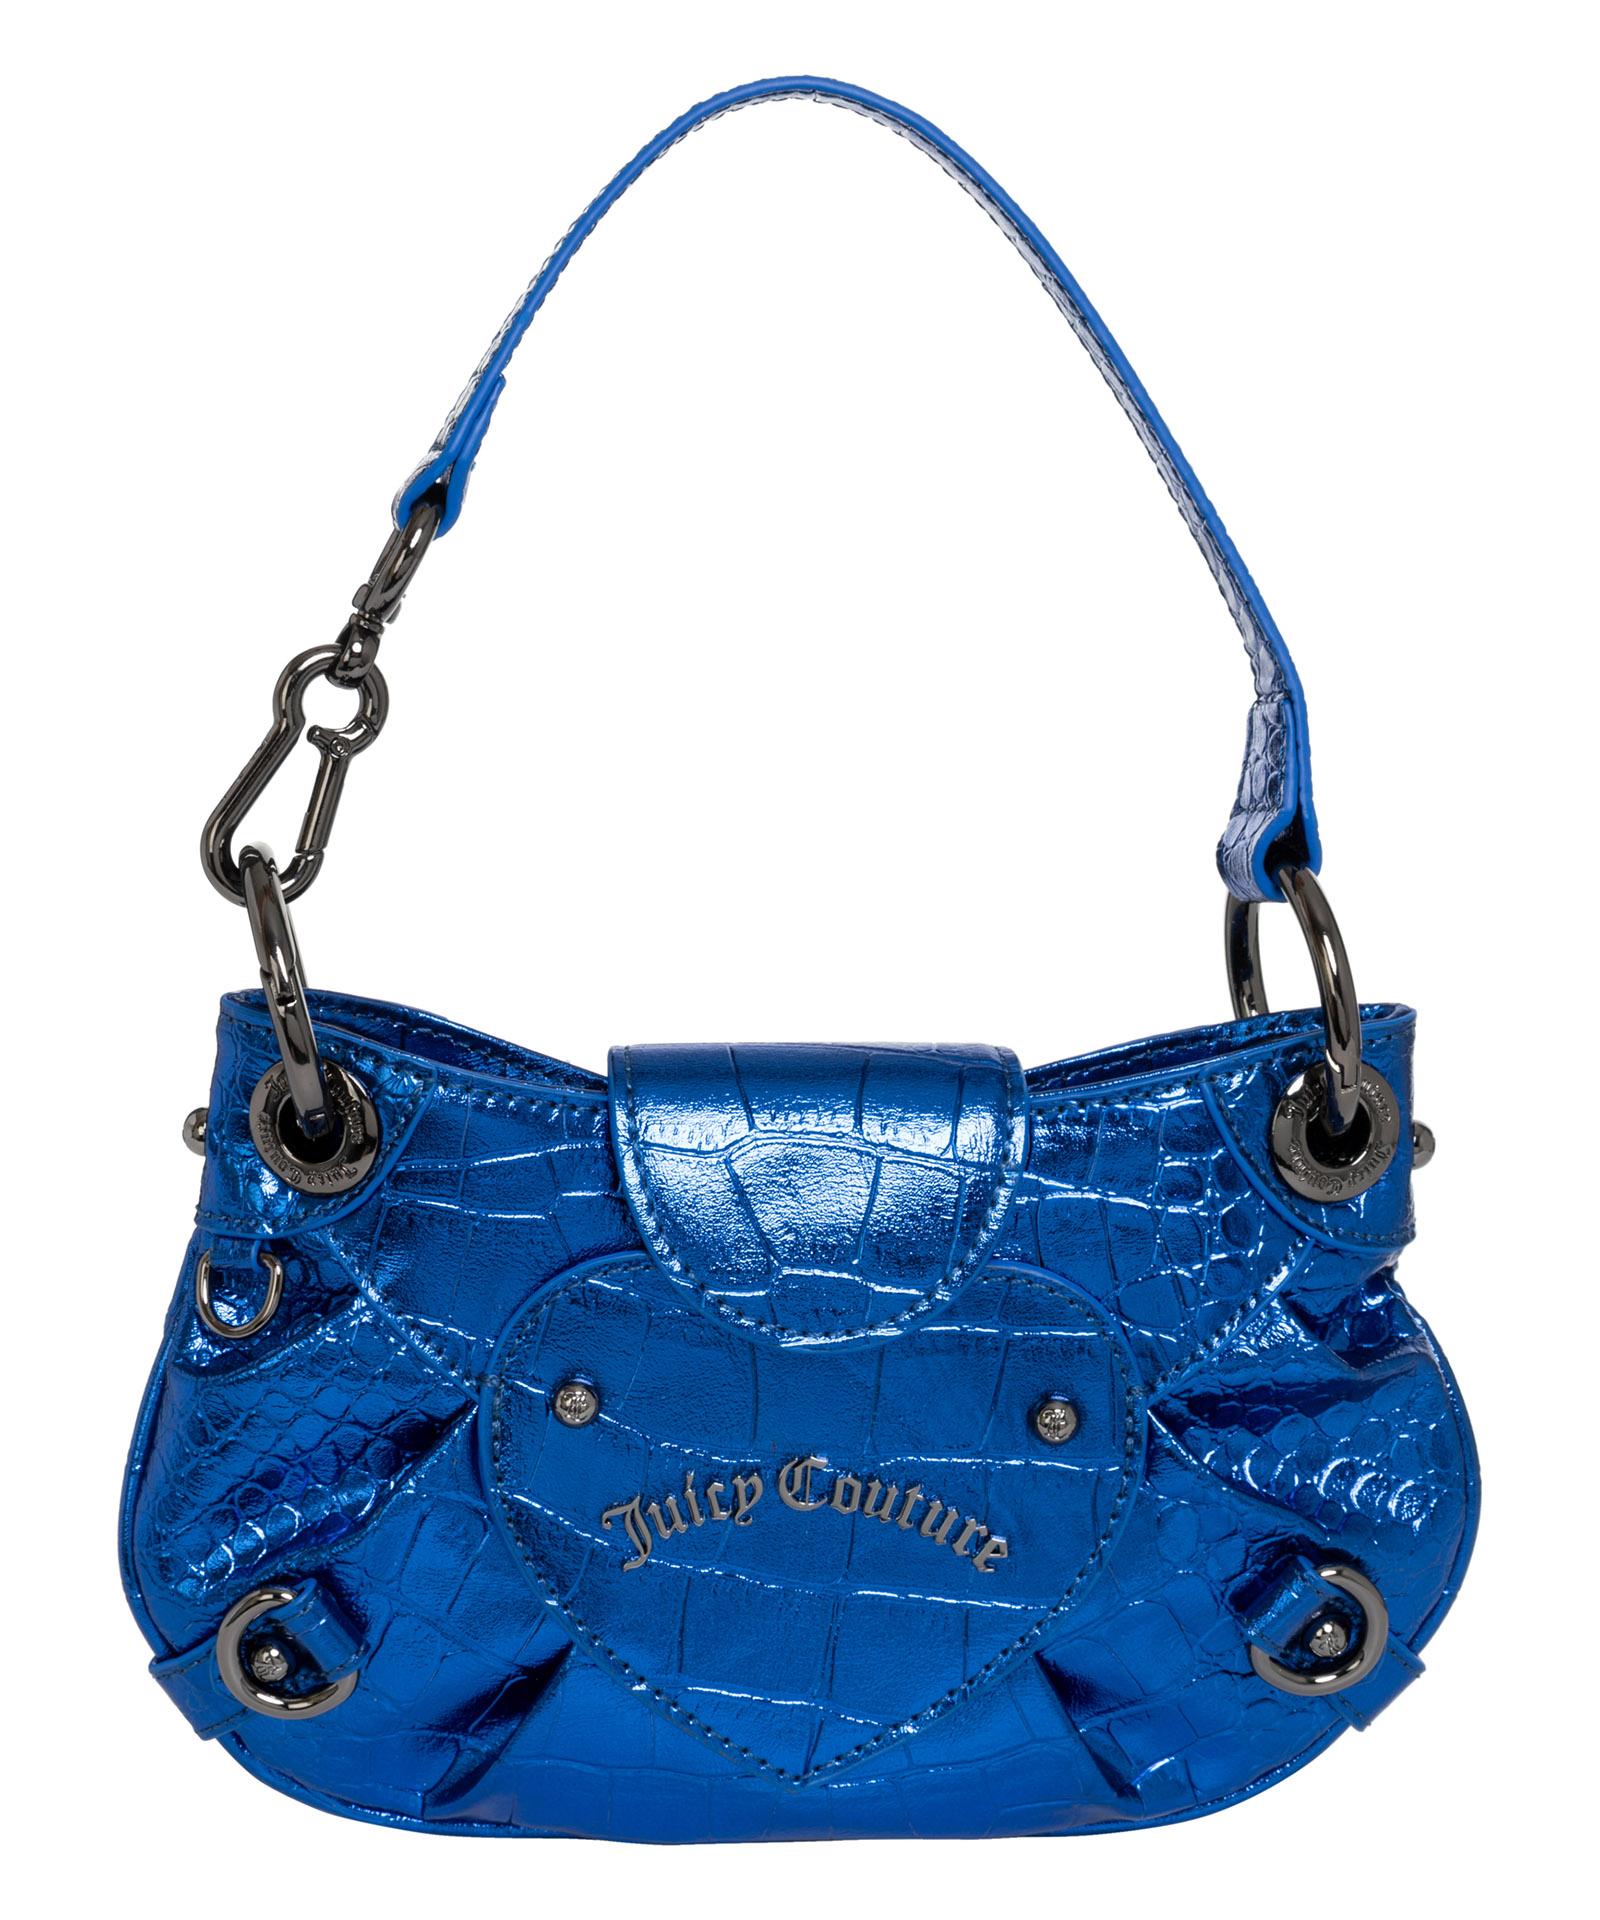 Juicy Couture Love Metallic Croco Handbag in Blue | Lyst